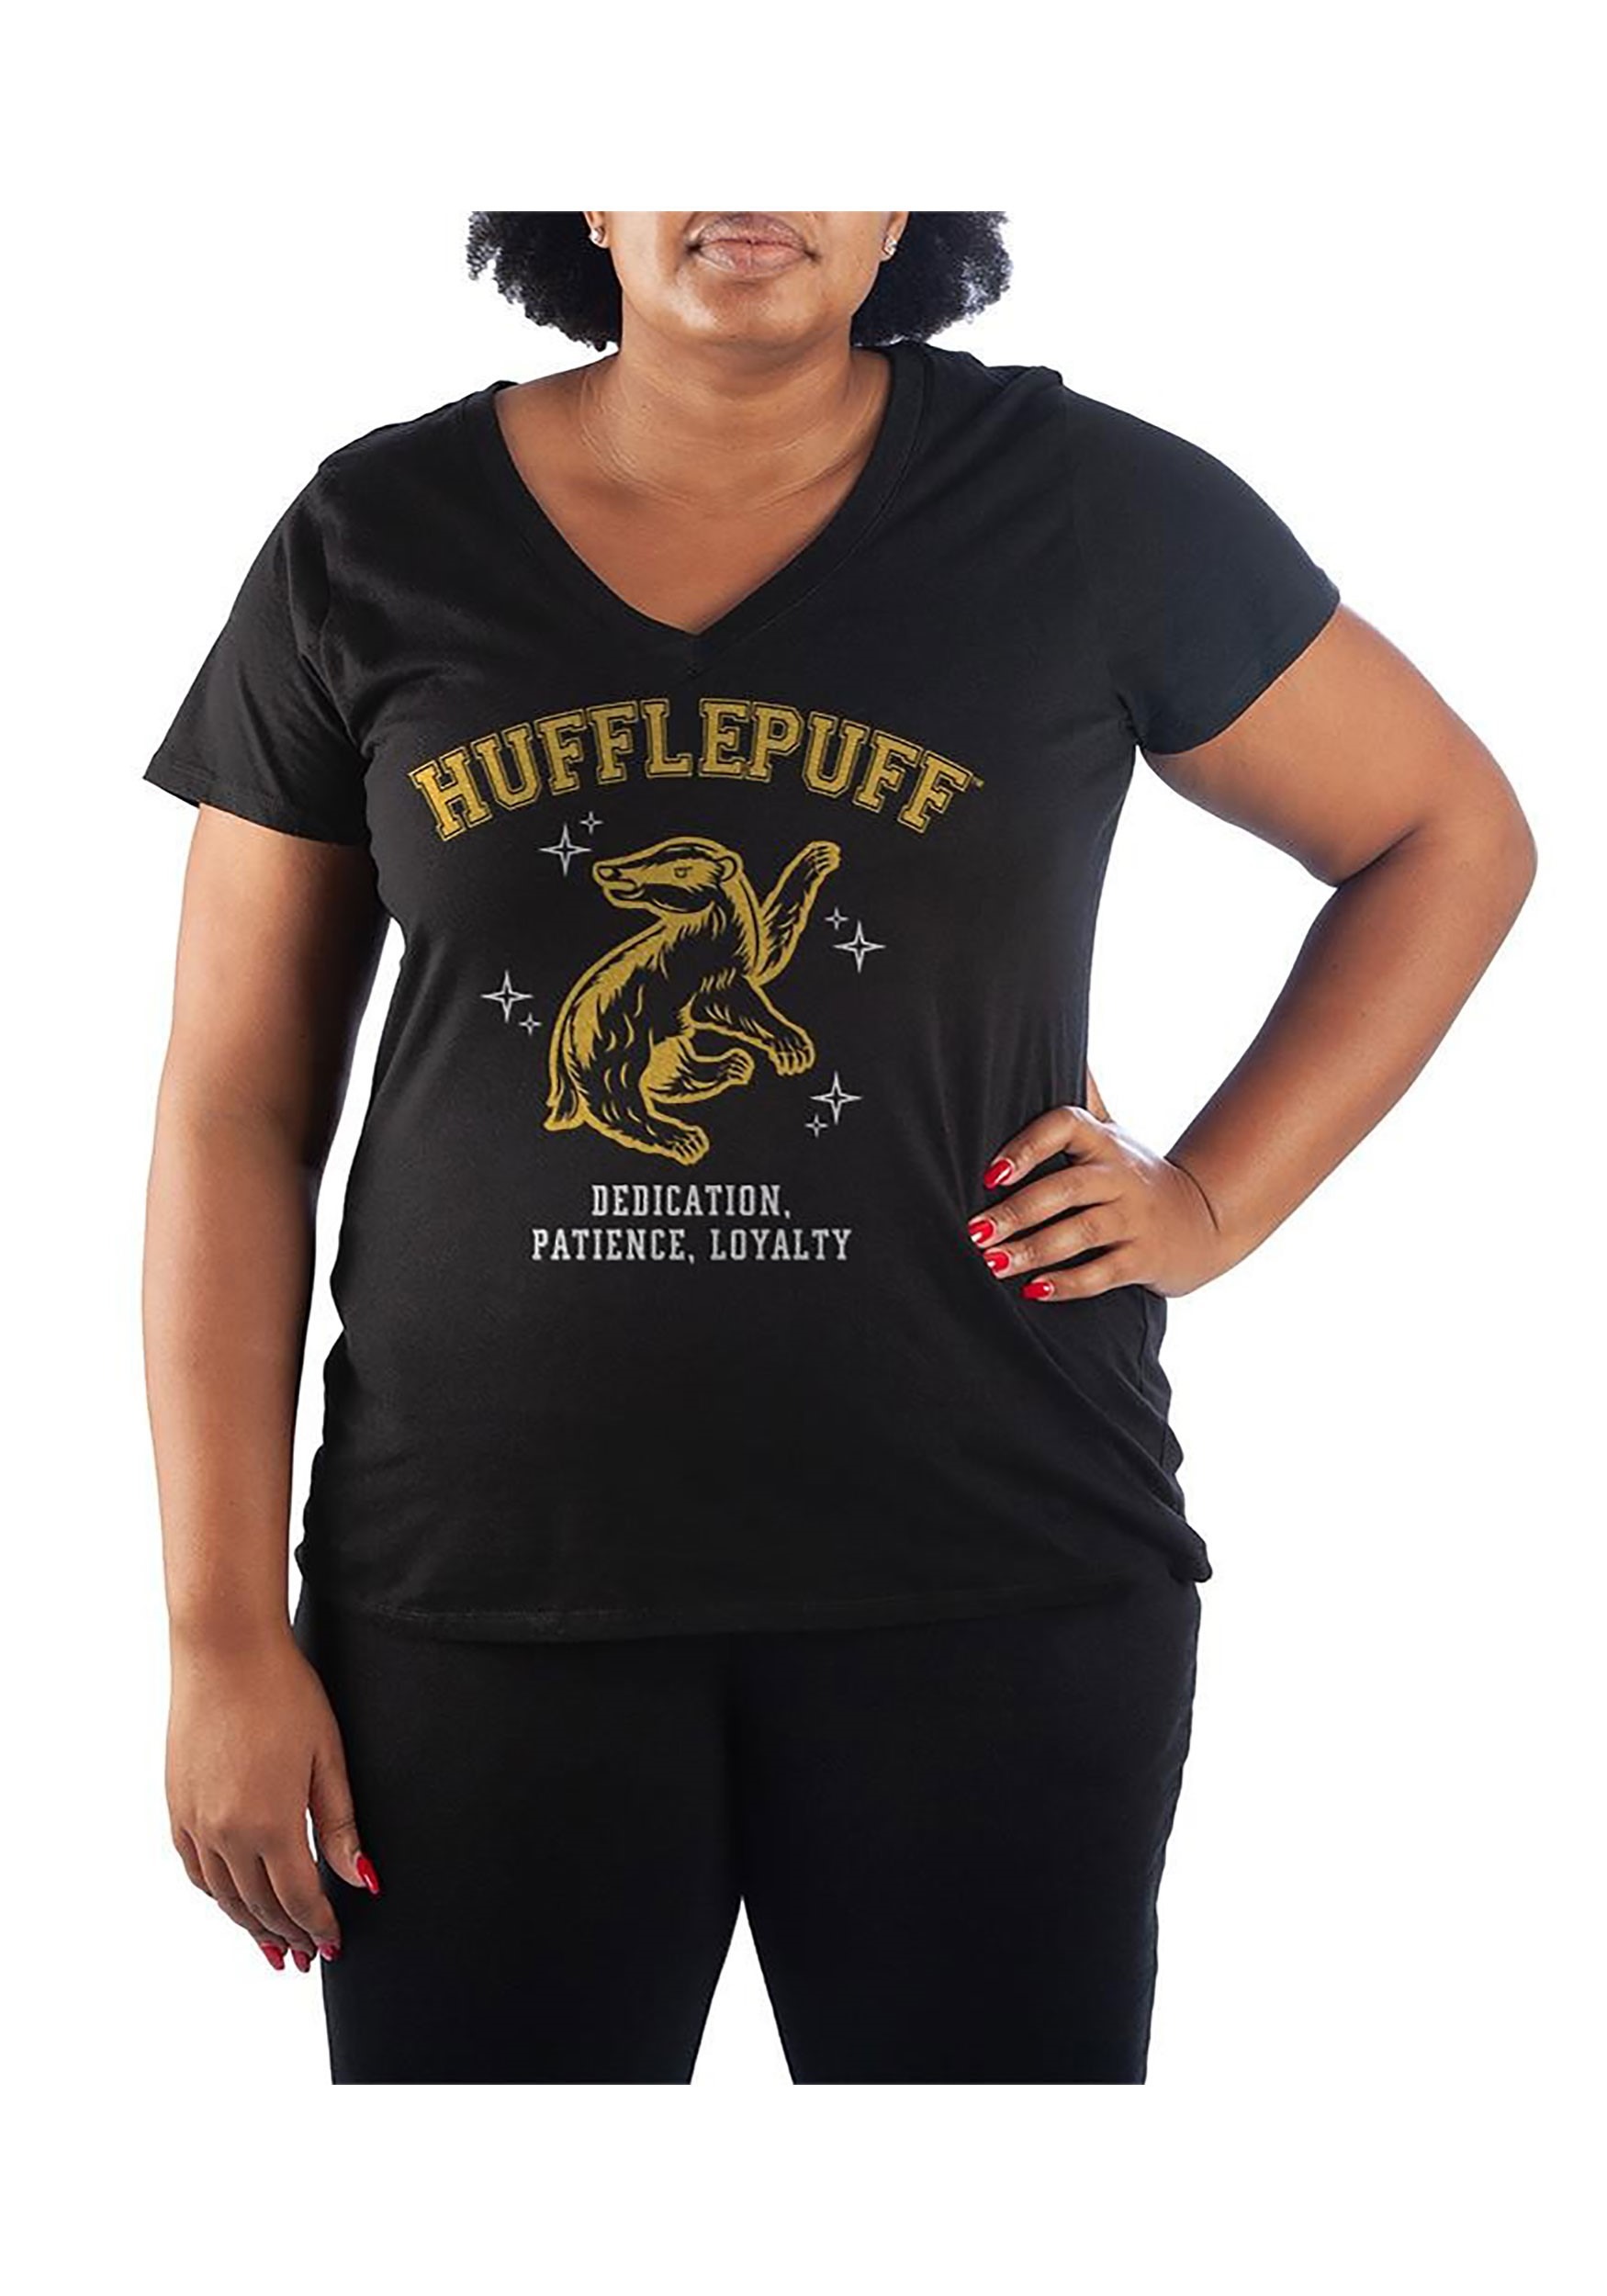 Hufflepuff Plus Size V-neck Tee for Women